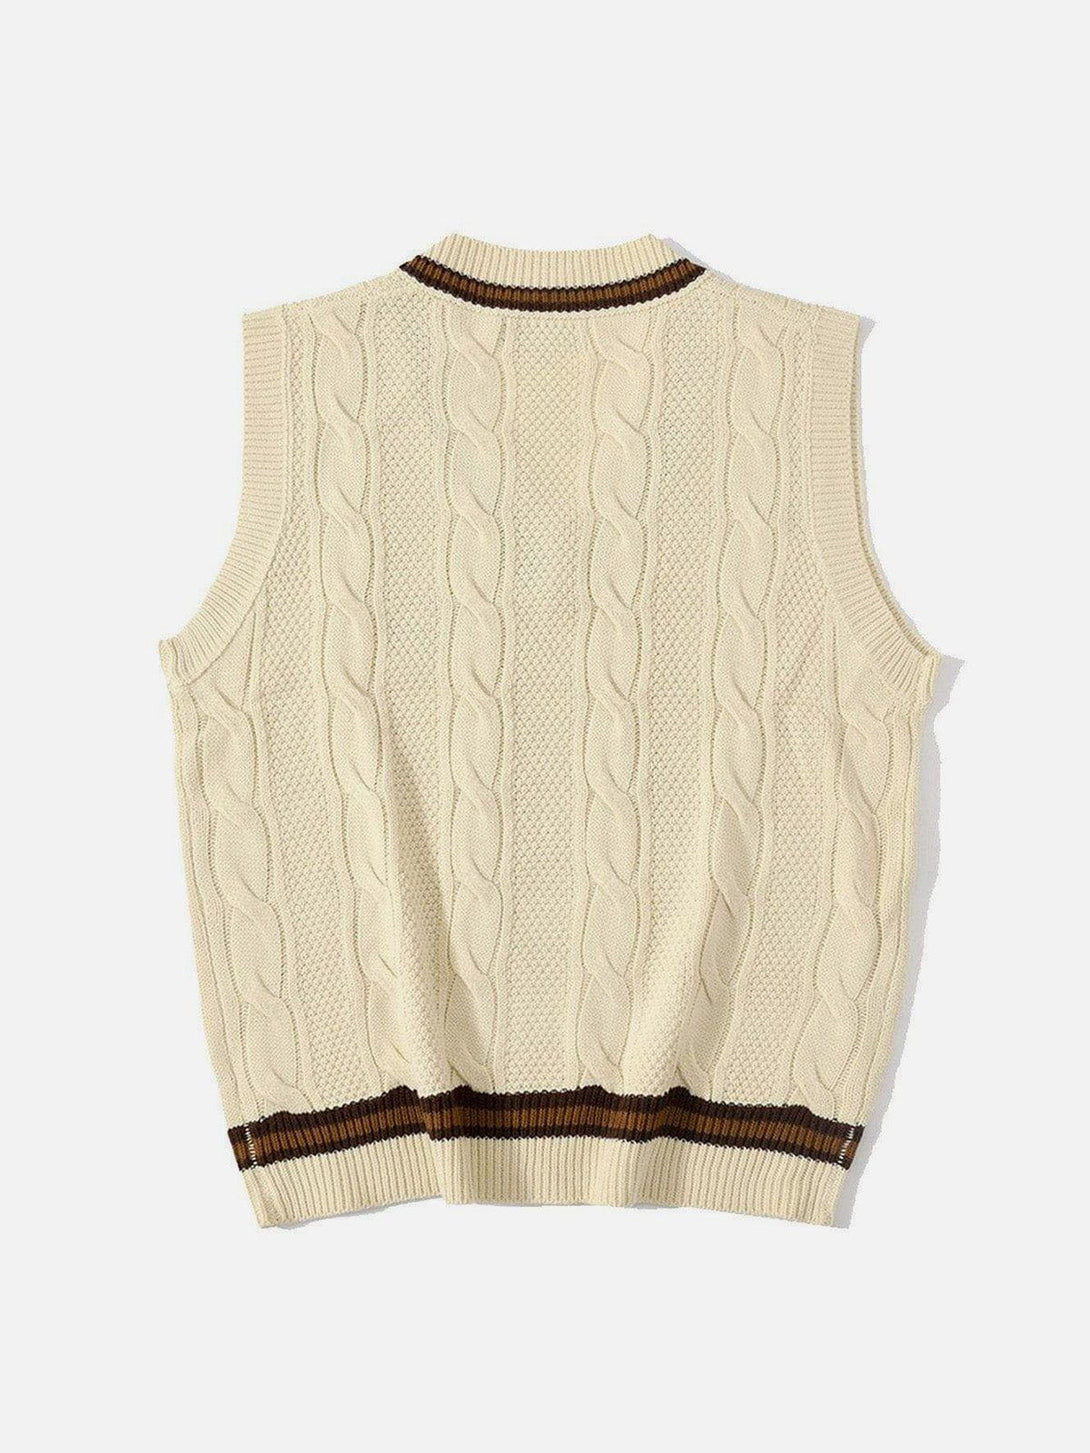 Majesda® - Vintage Preppy Style Knit Sweater Vest outfit ideas streetwear fashion